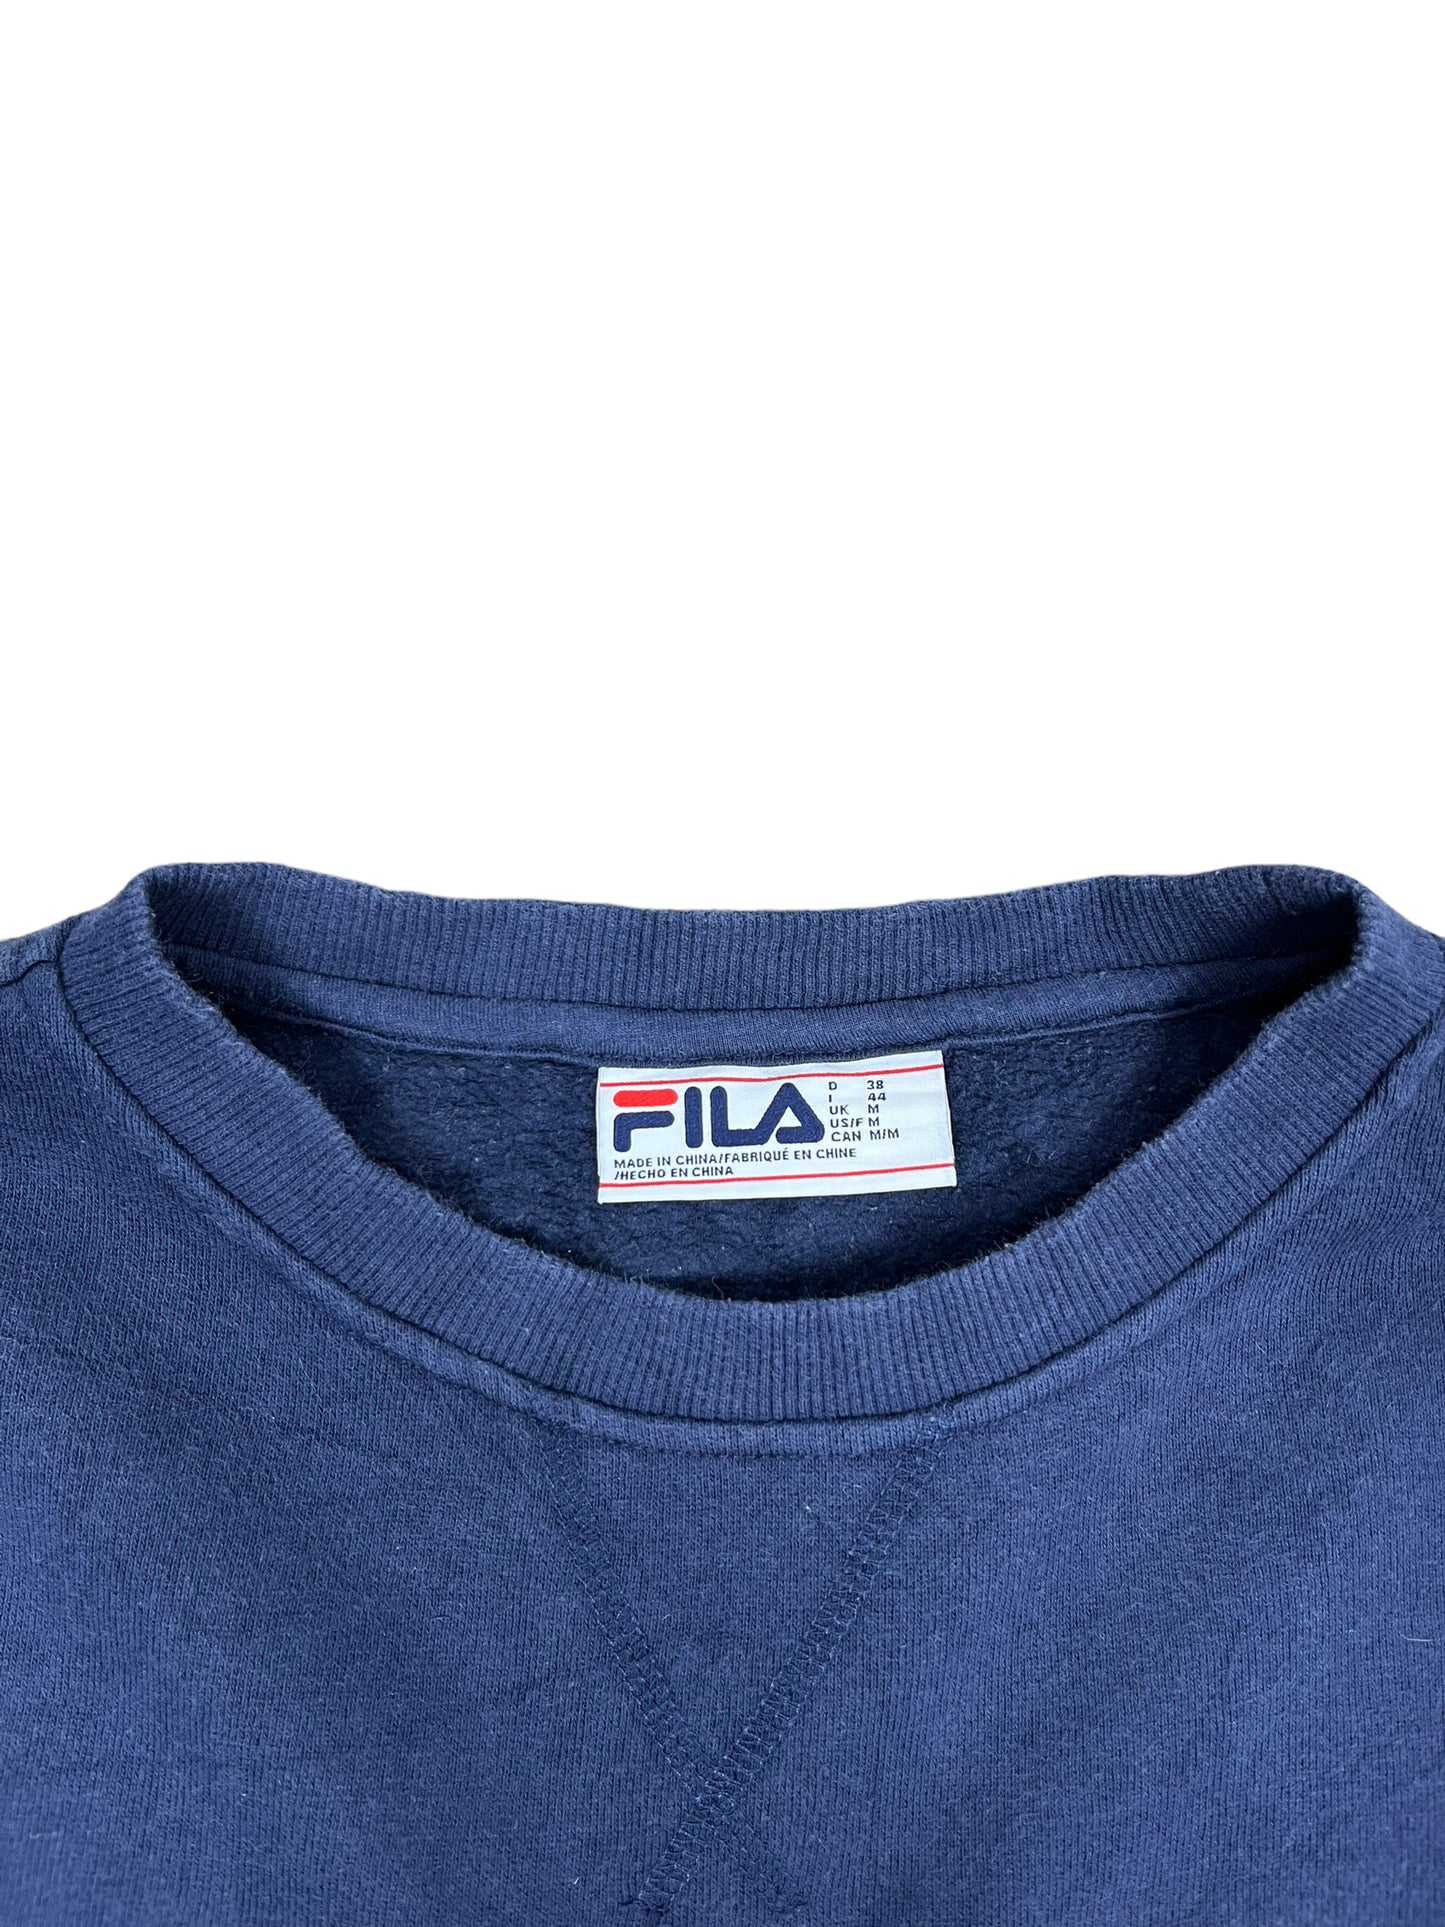 Vintage 90’s Fila Sweatshirt - Small